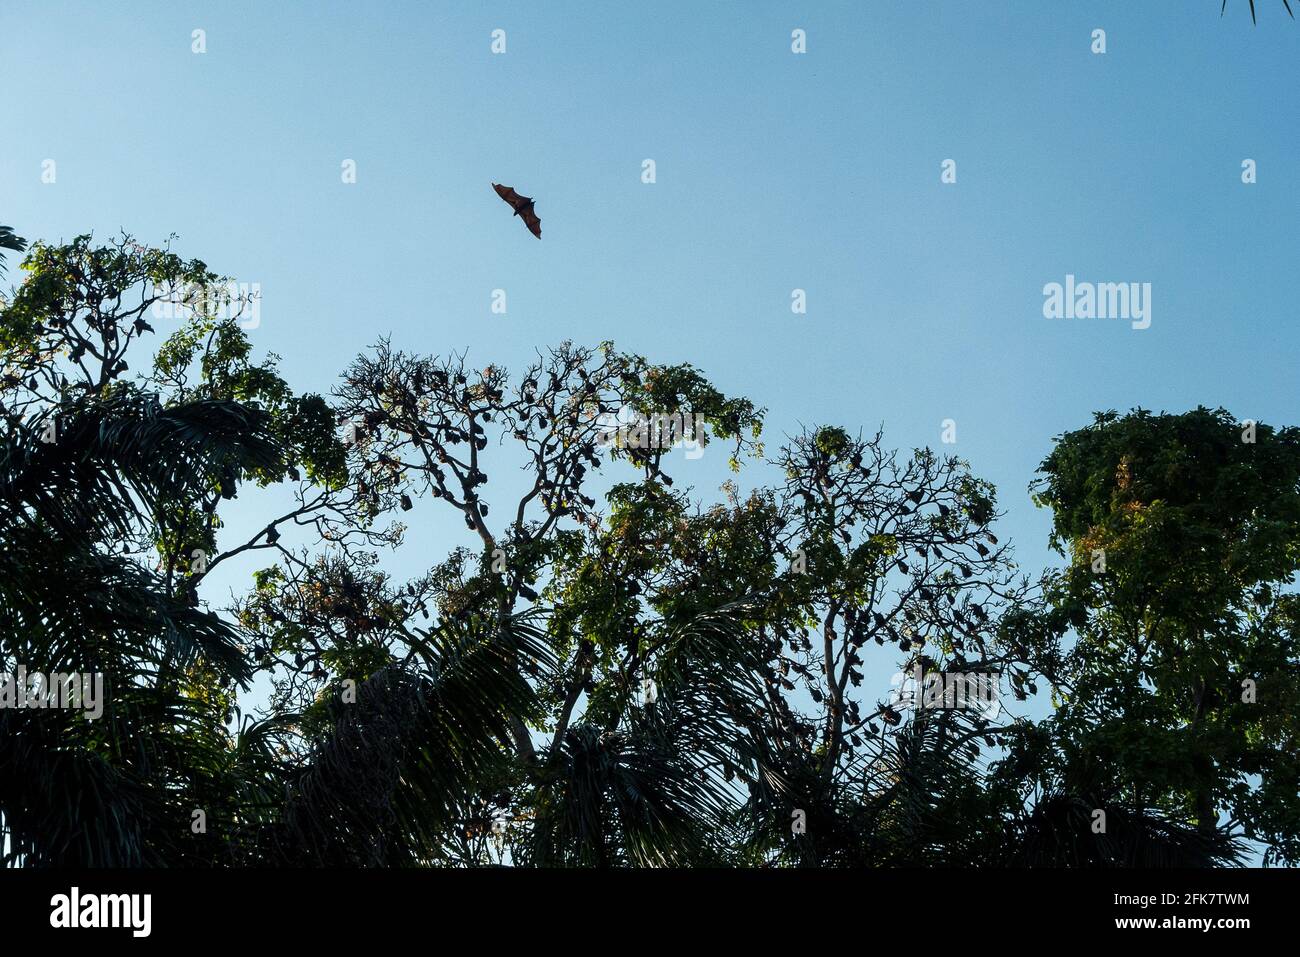 Kandy, Peradeniya botanical garden, Sri Lanka: a Pteropodida flies around a tree where many other Pteropodidae are hung Stock Photo